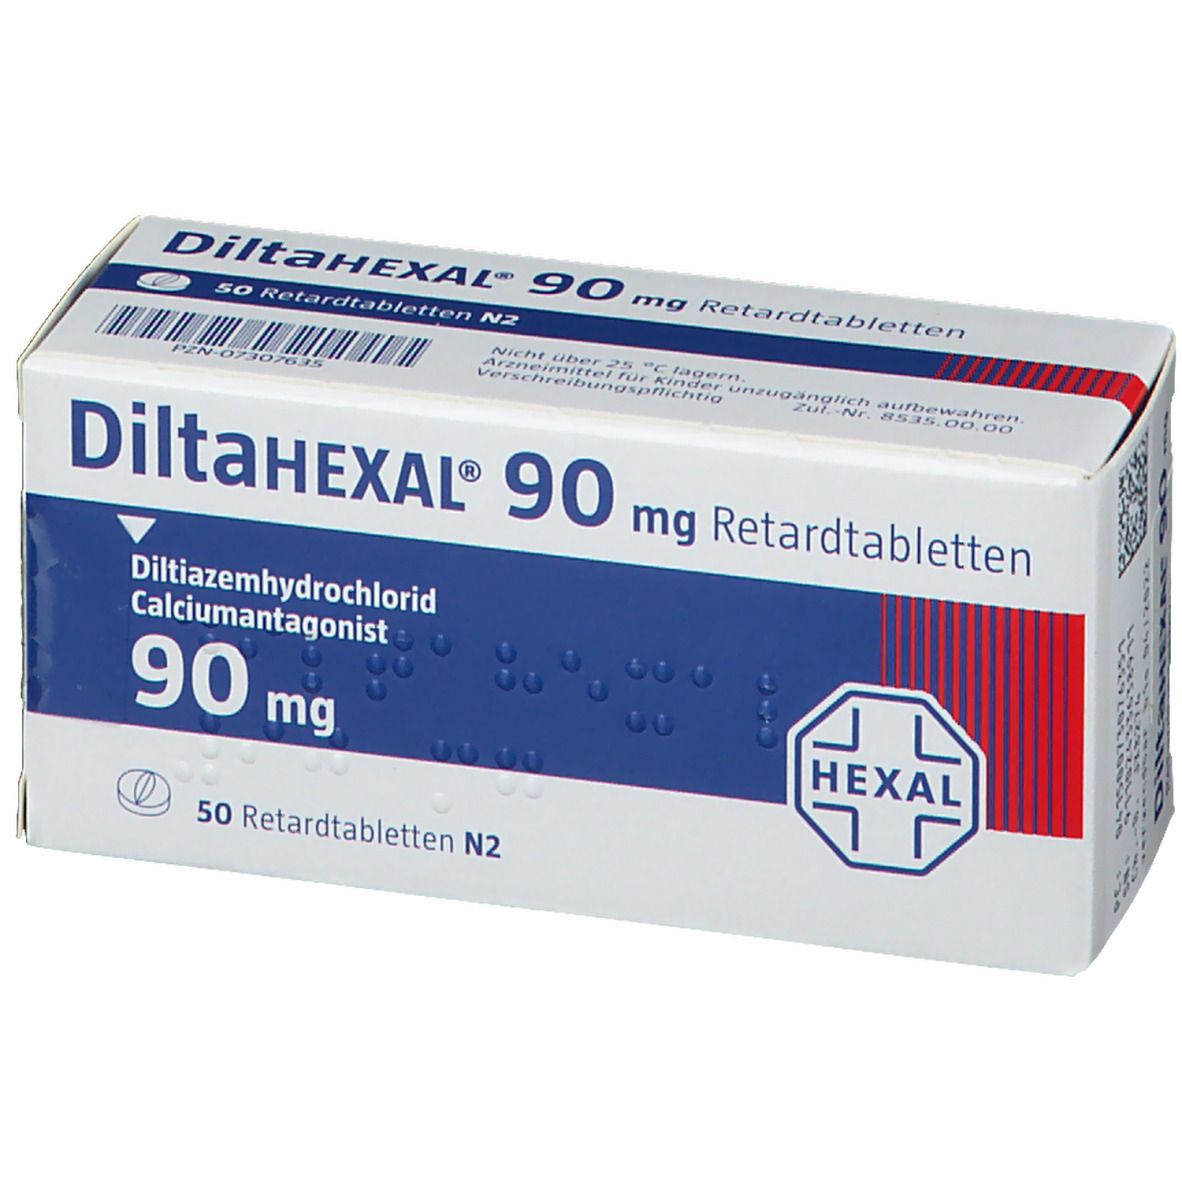 DiltaHEXAL 90 mg Retardtabletten